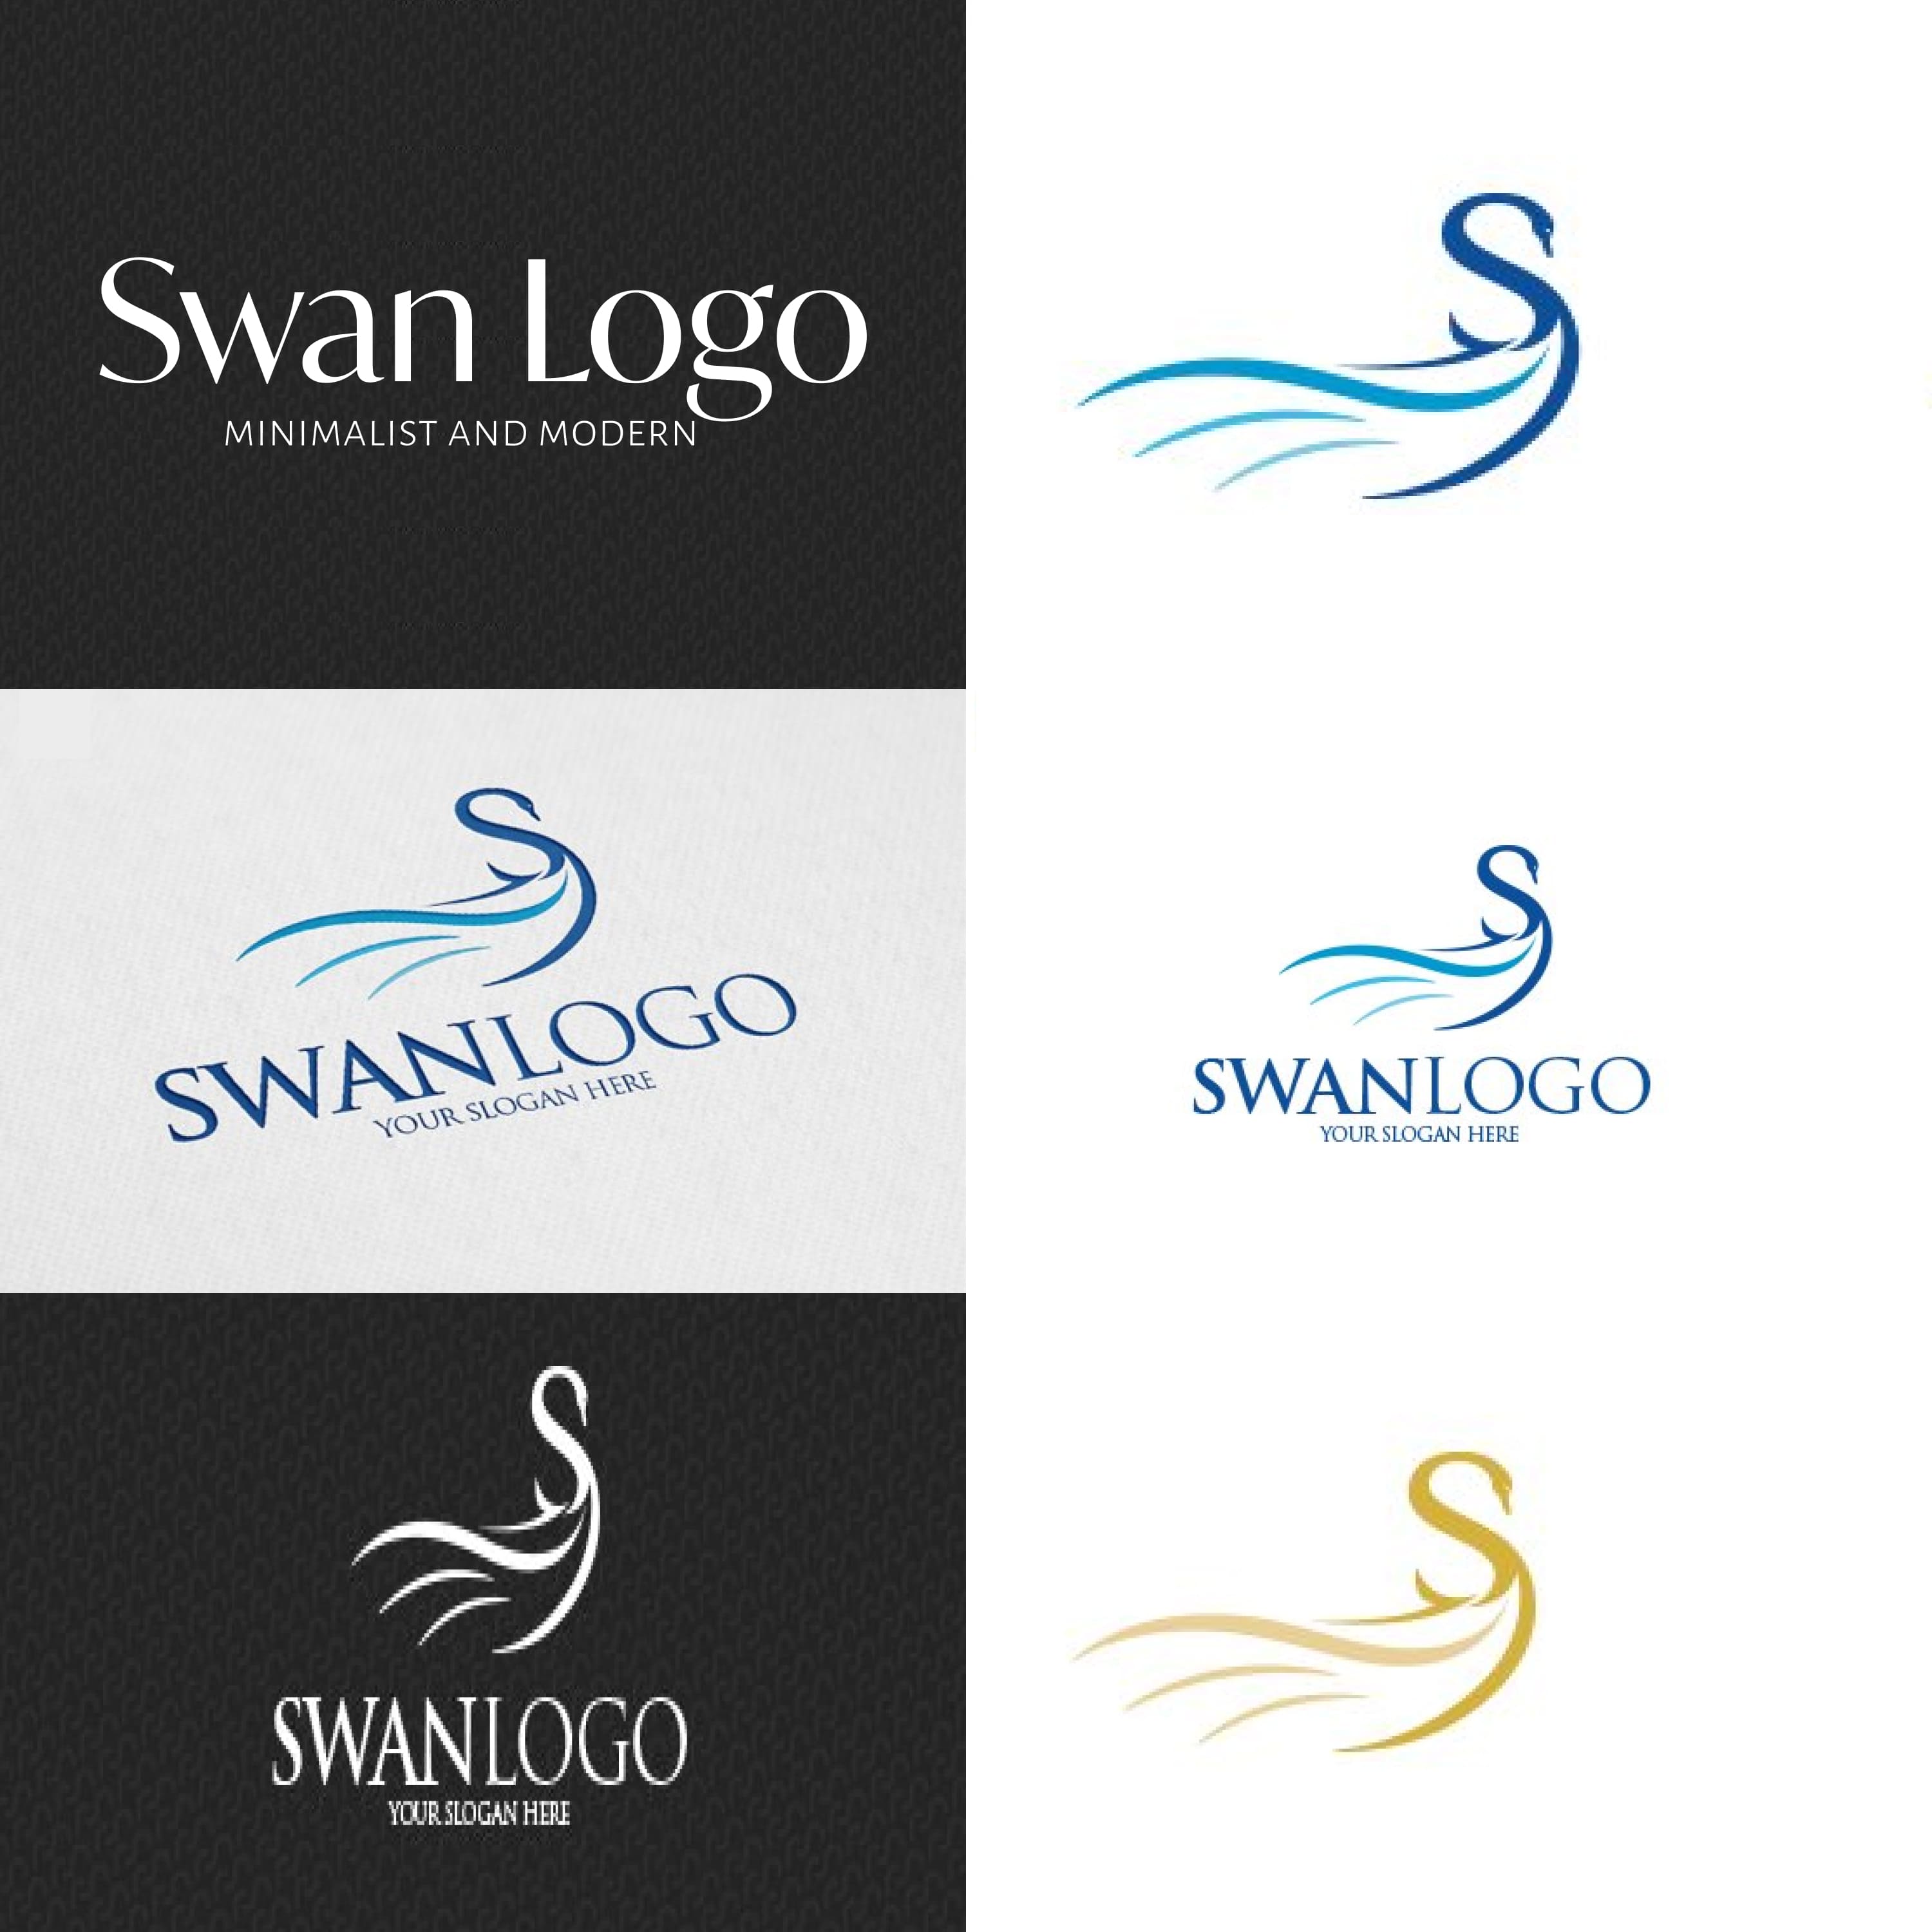 Swan Logo cover.